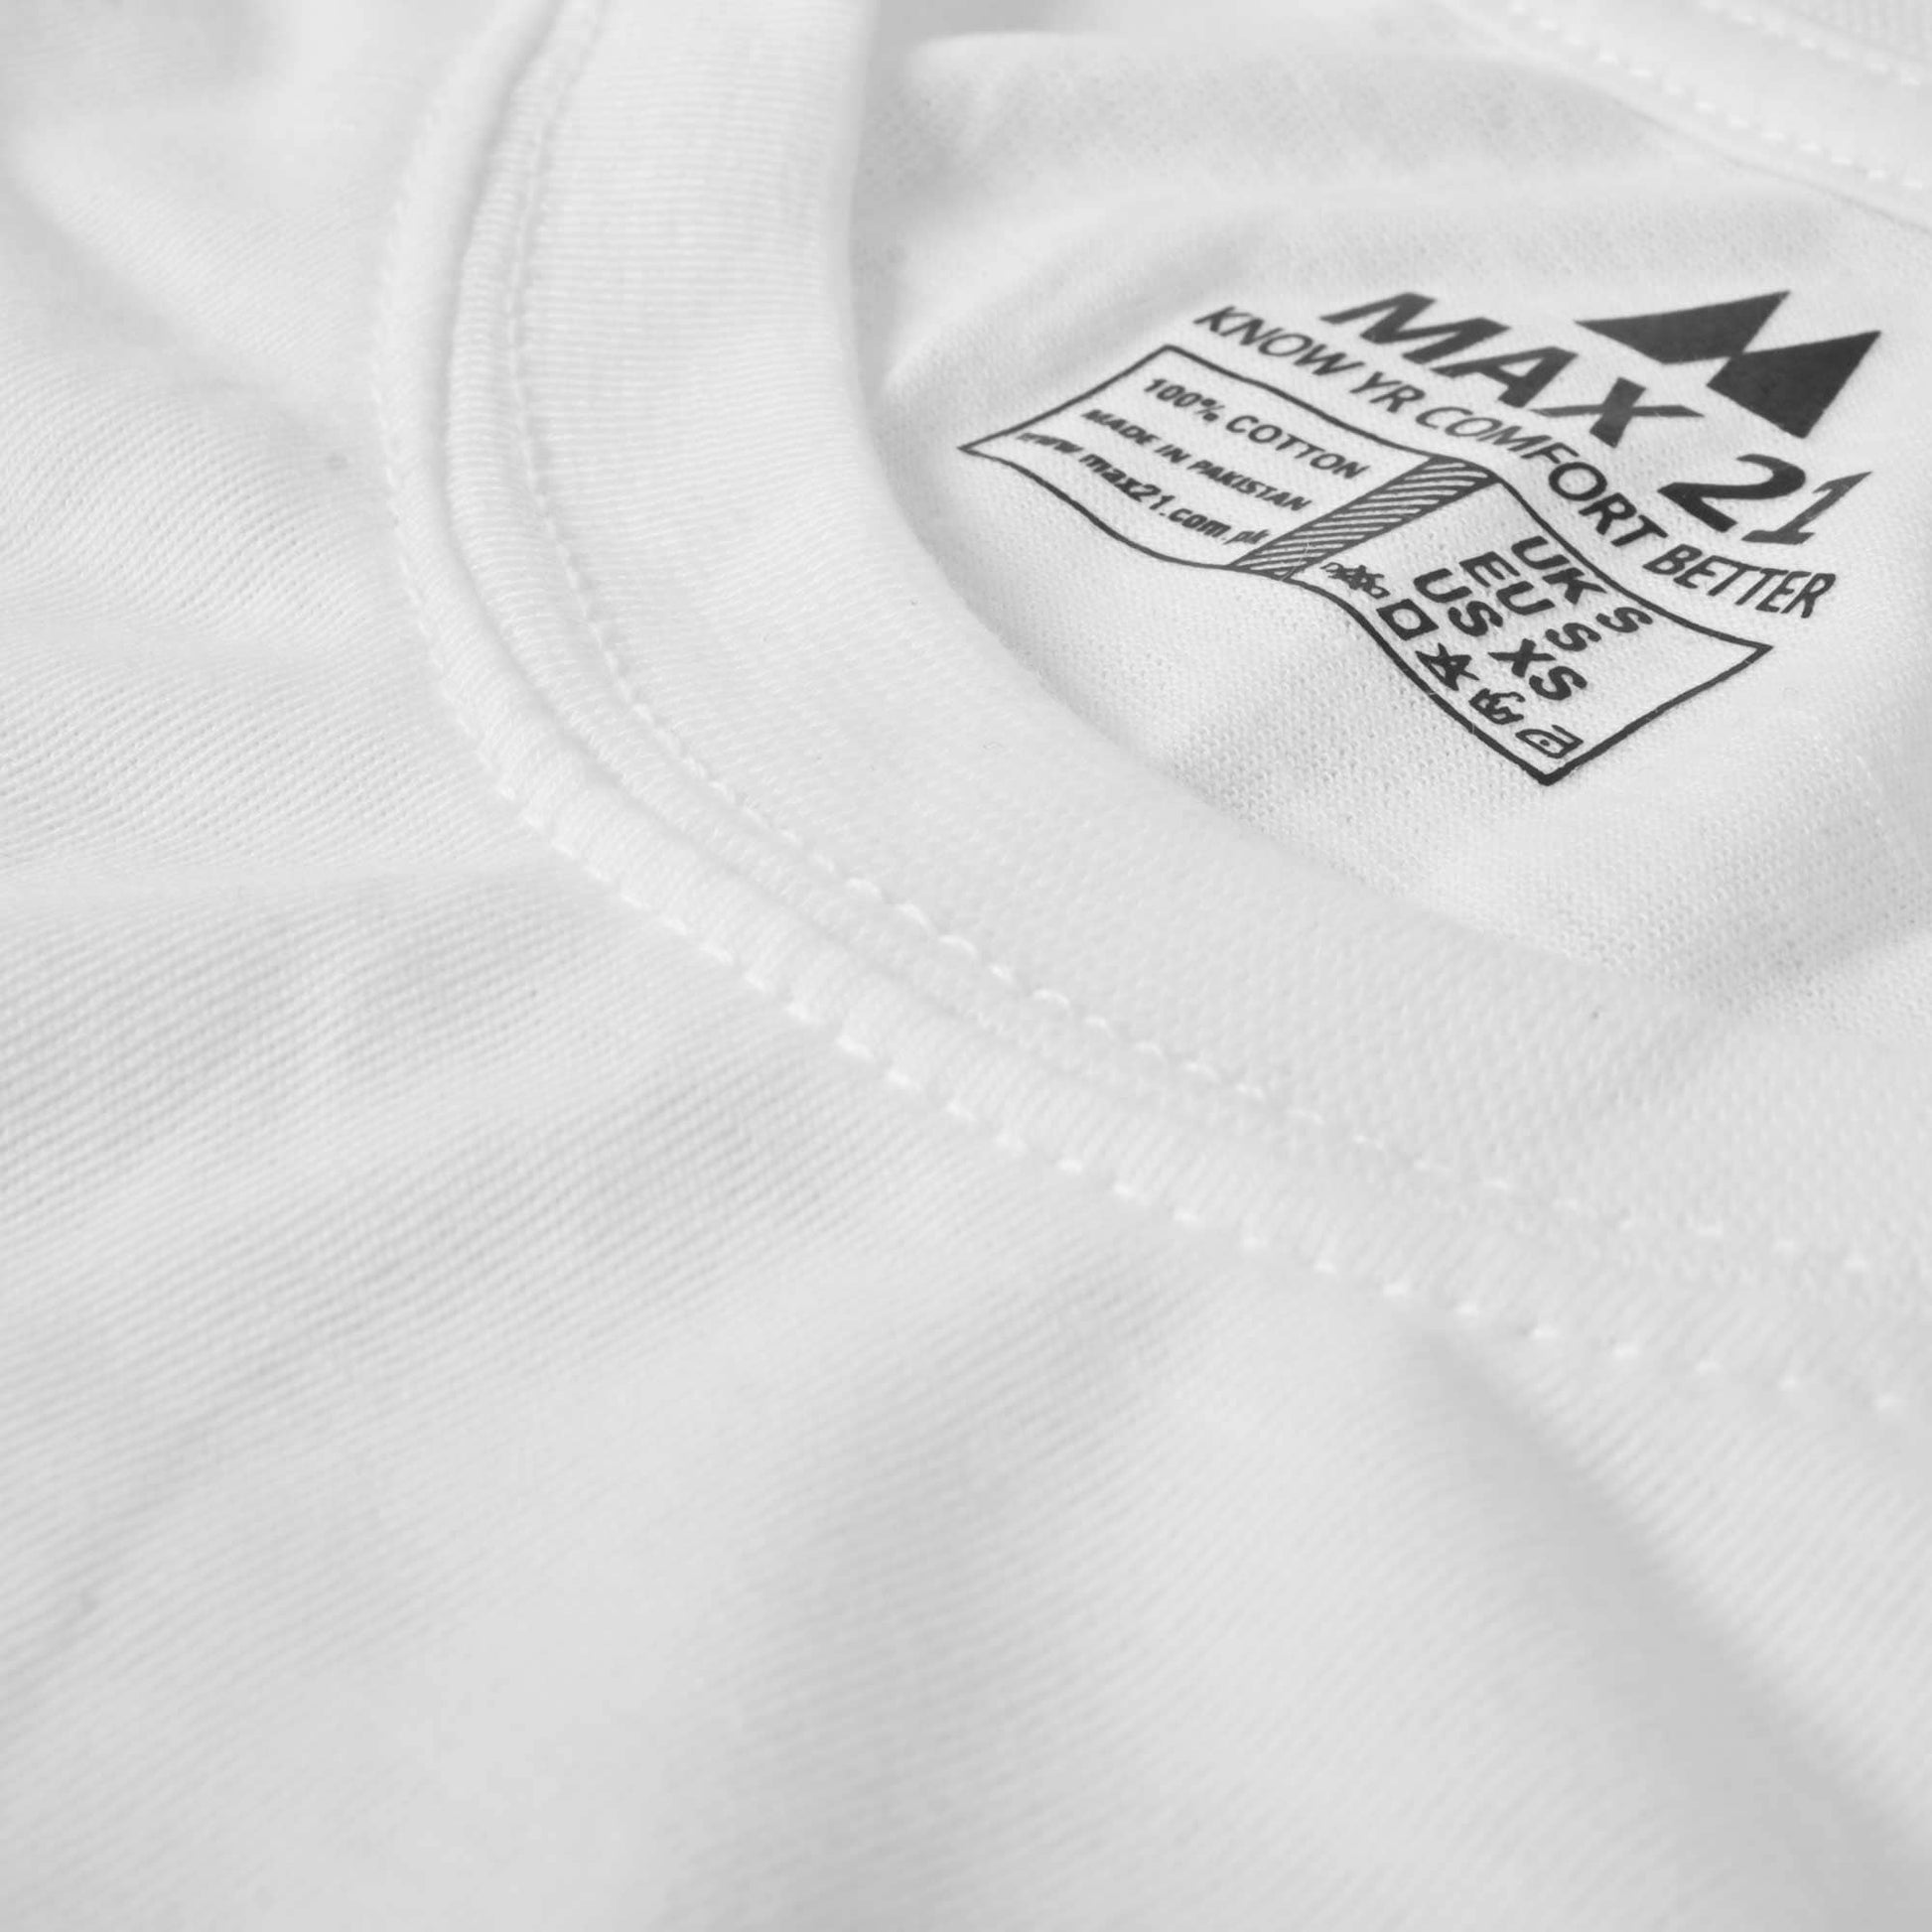 Max 21 Men's Born To Ride 78 Embossed Short Sleeves Tee Shirt Men's Tee Shirt SZK 